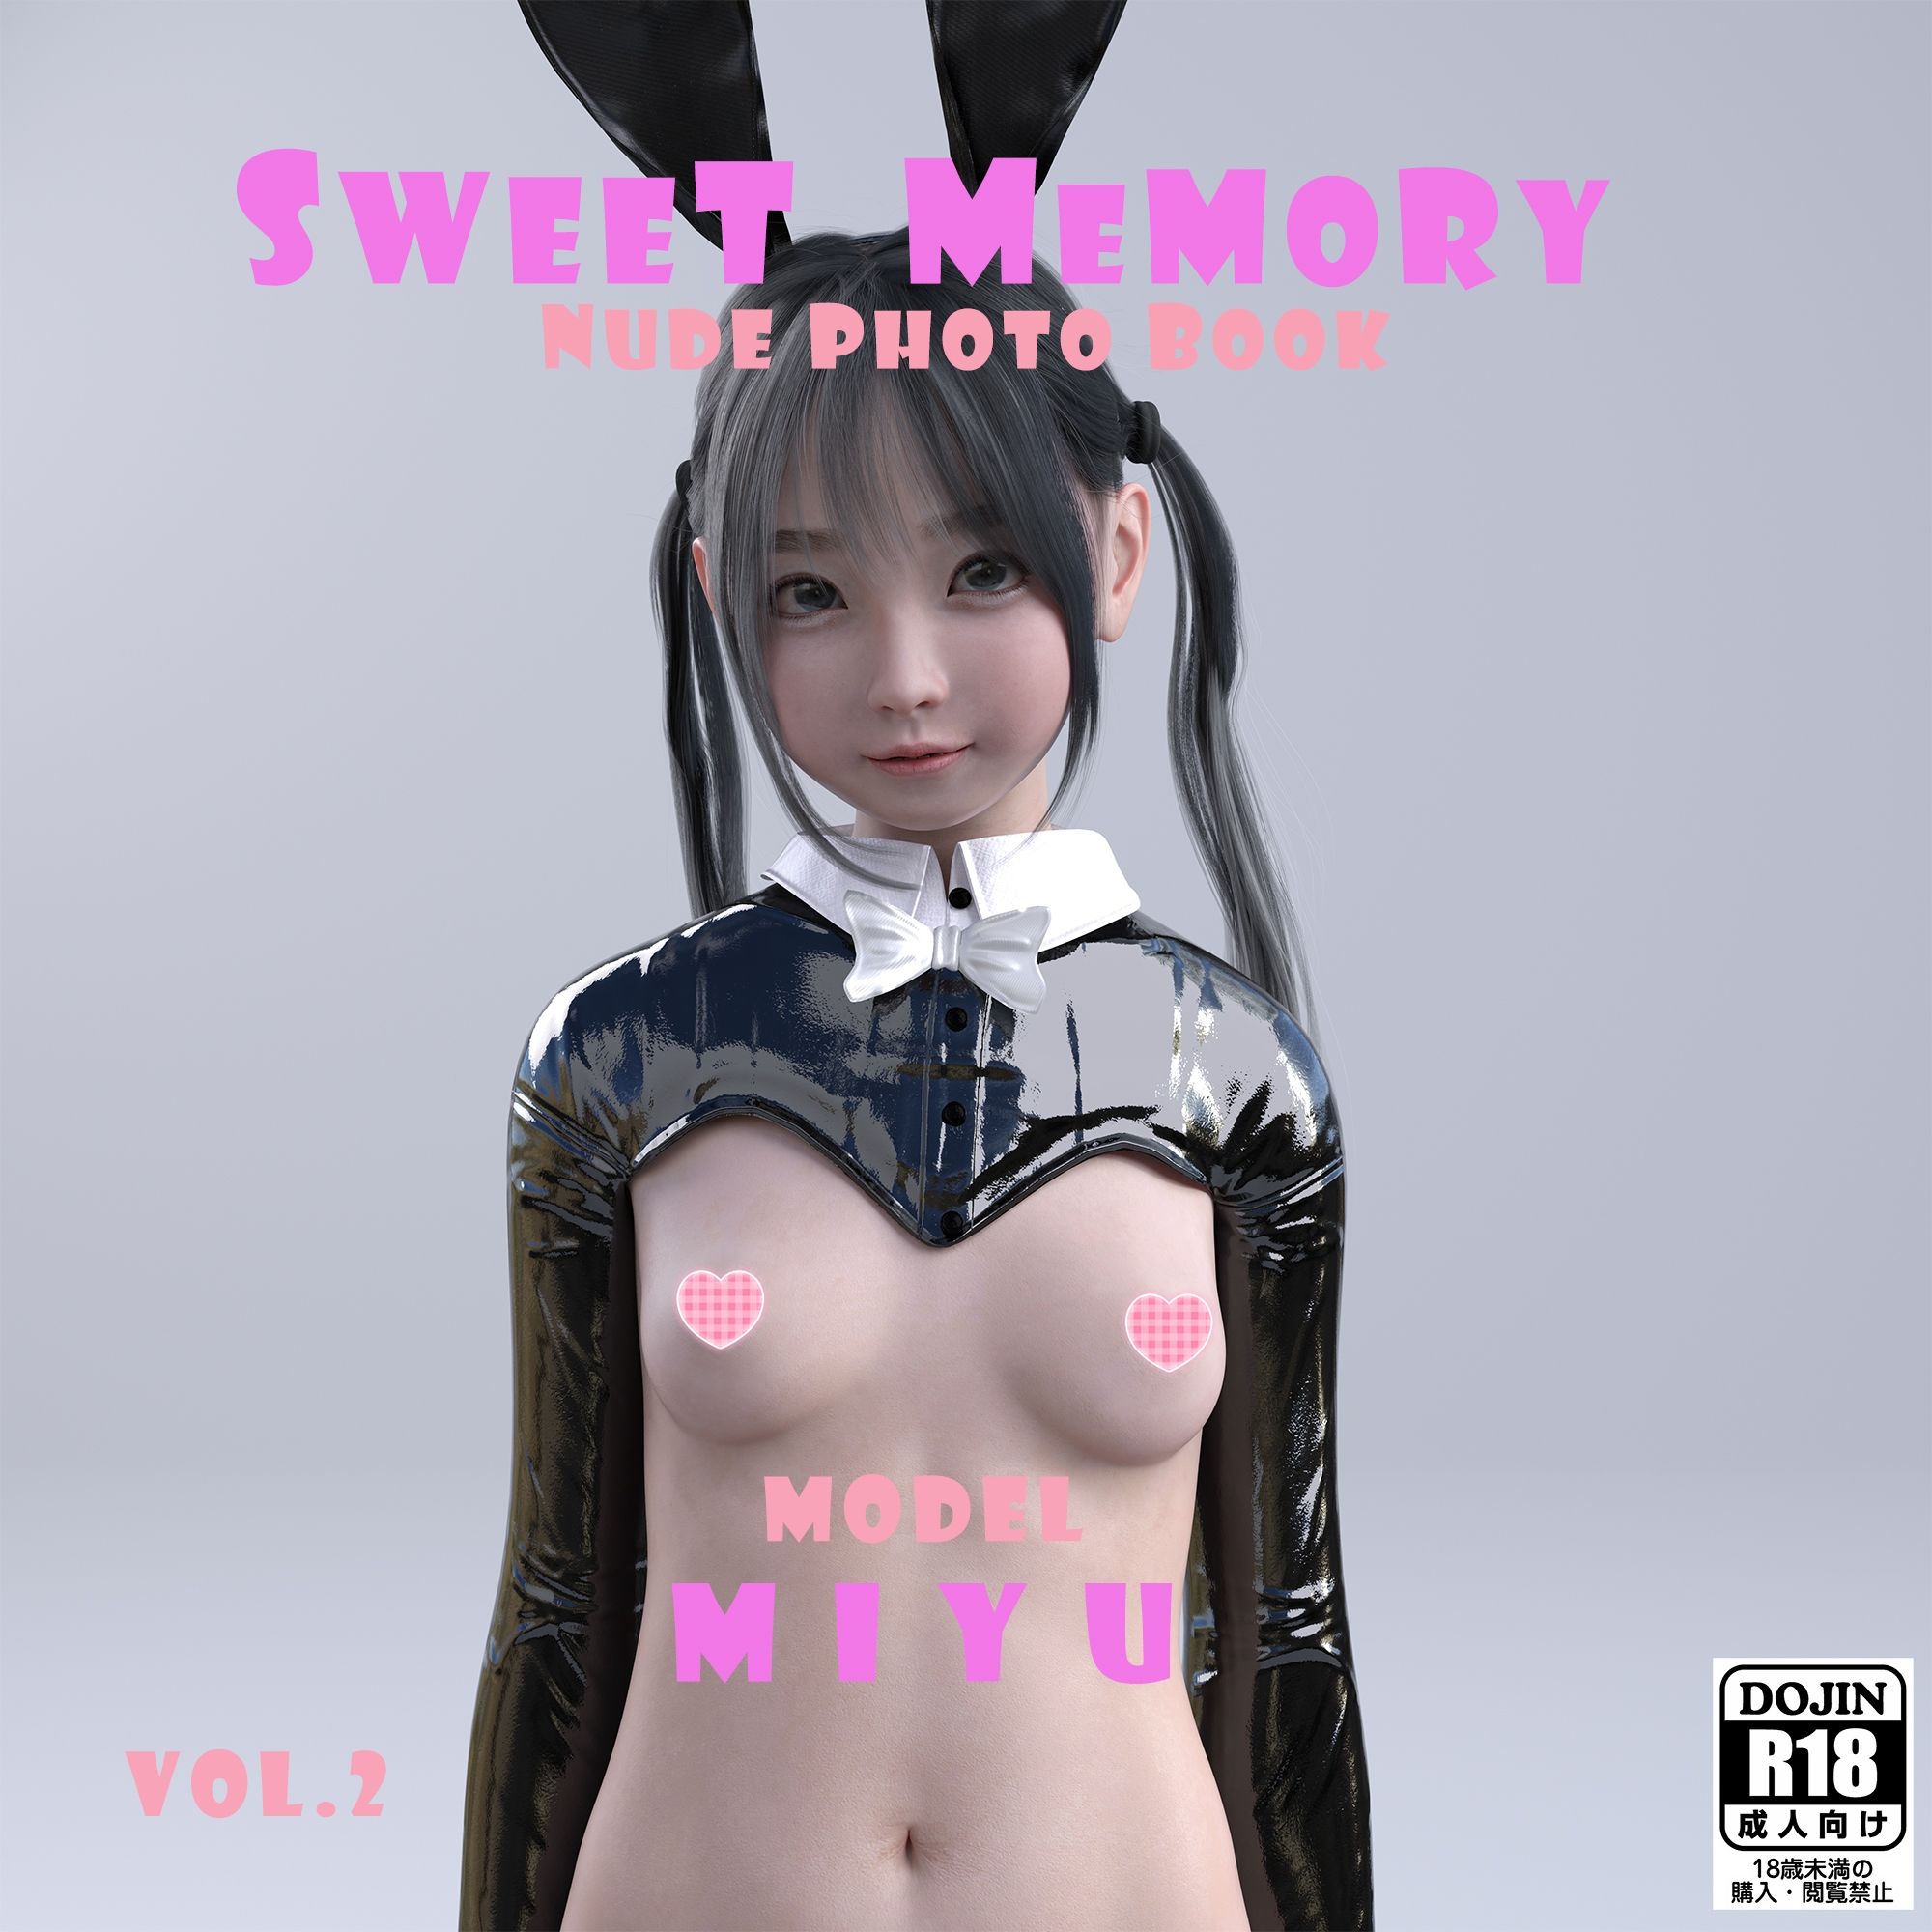 SWEET MEMORY - nude photo book - Model MIYU Vol.2【スイートメモリー ヌードフォトブック】_2